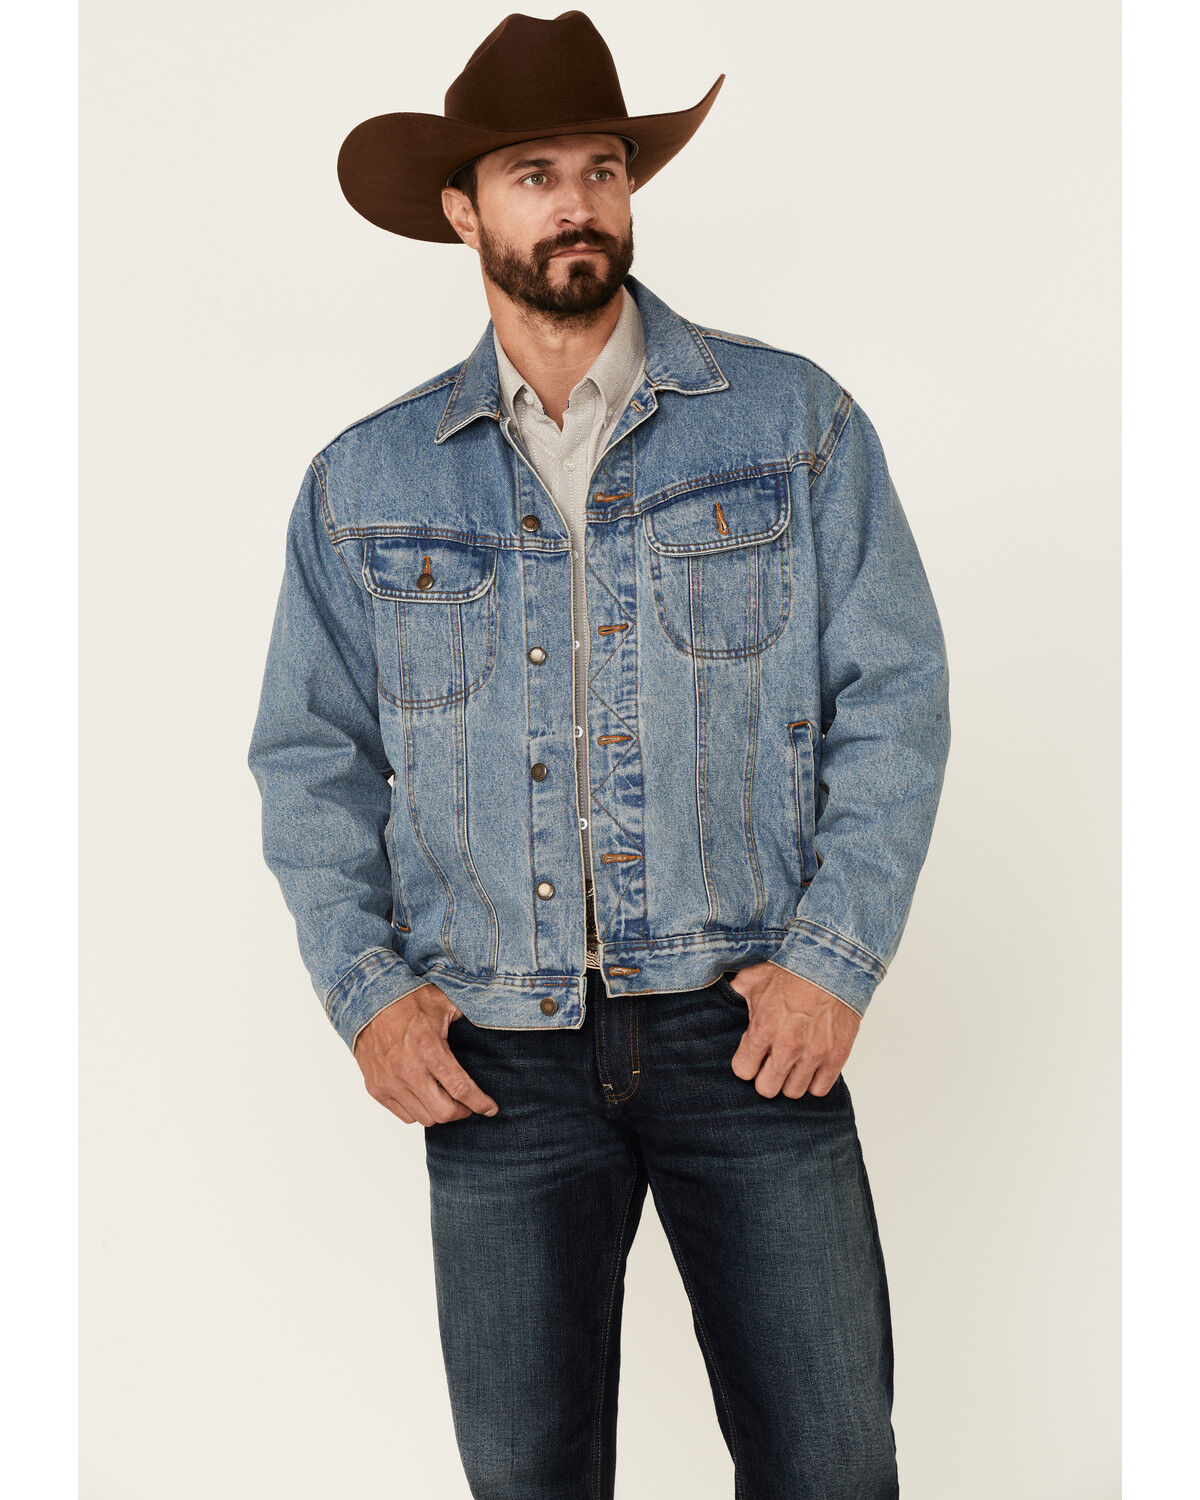 Caopixx Jackets for Mens Classic Western Style Lined Denim Jacket Trucker Coat Outwear Clearance Sale 